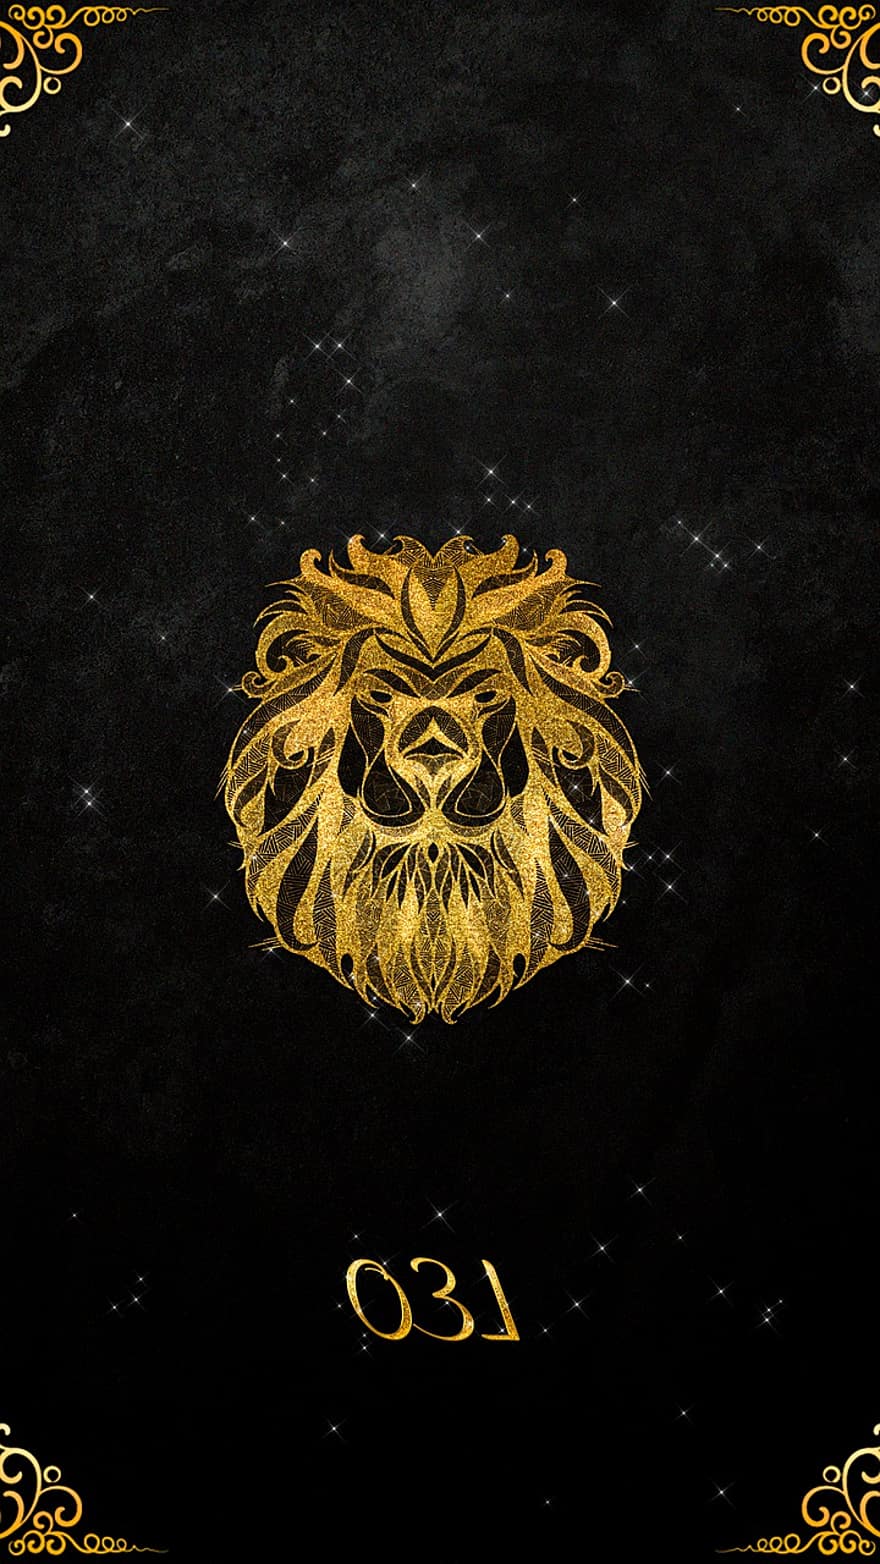 León, signo del zodiaco, horóscopo, oro, oscuro, estrellas, constelación, papel pintado, fondo, decoración, ilustración